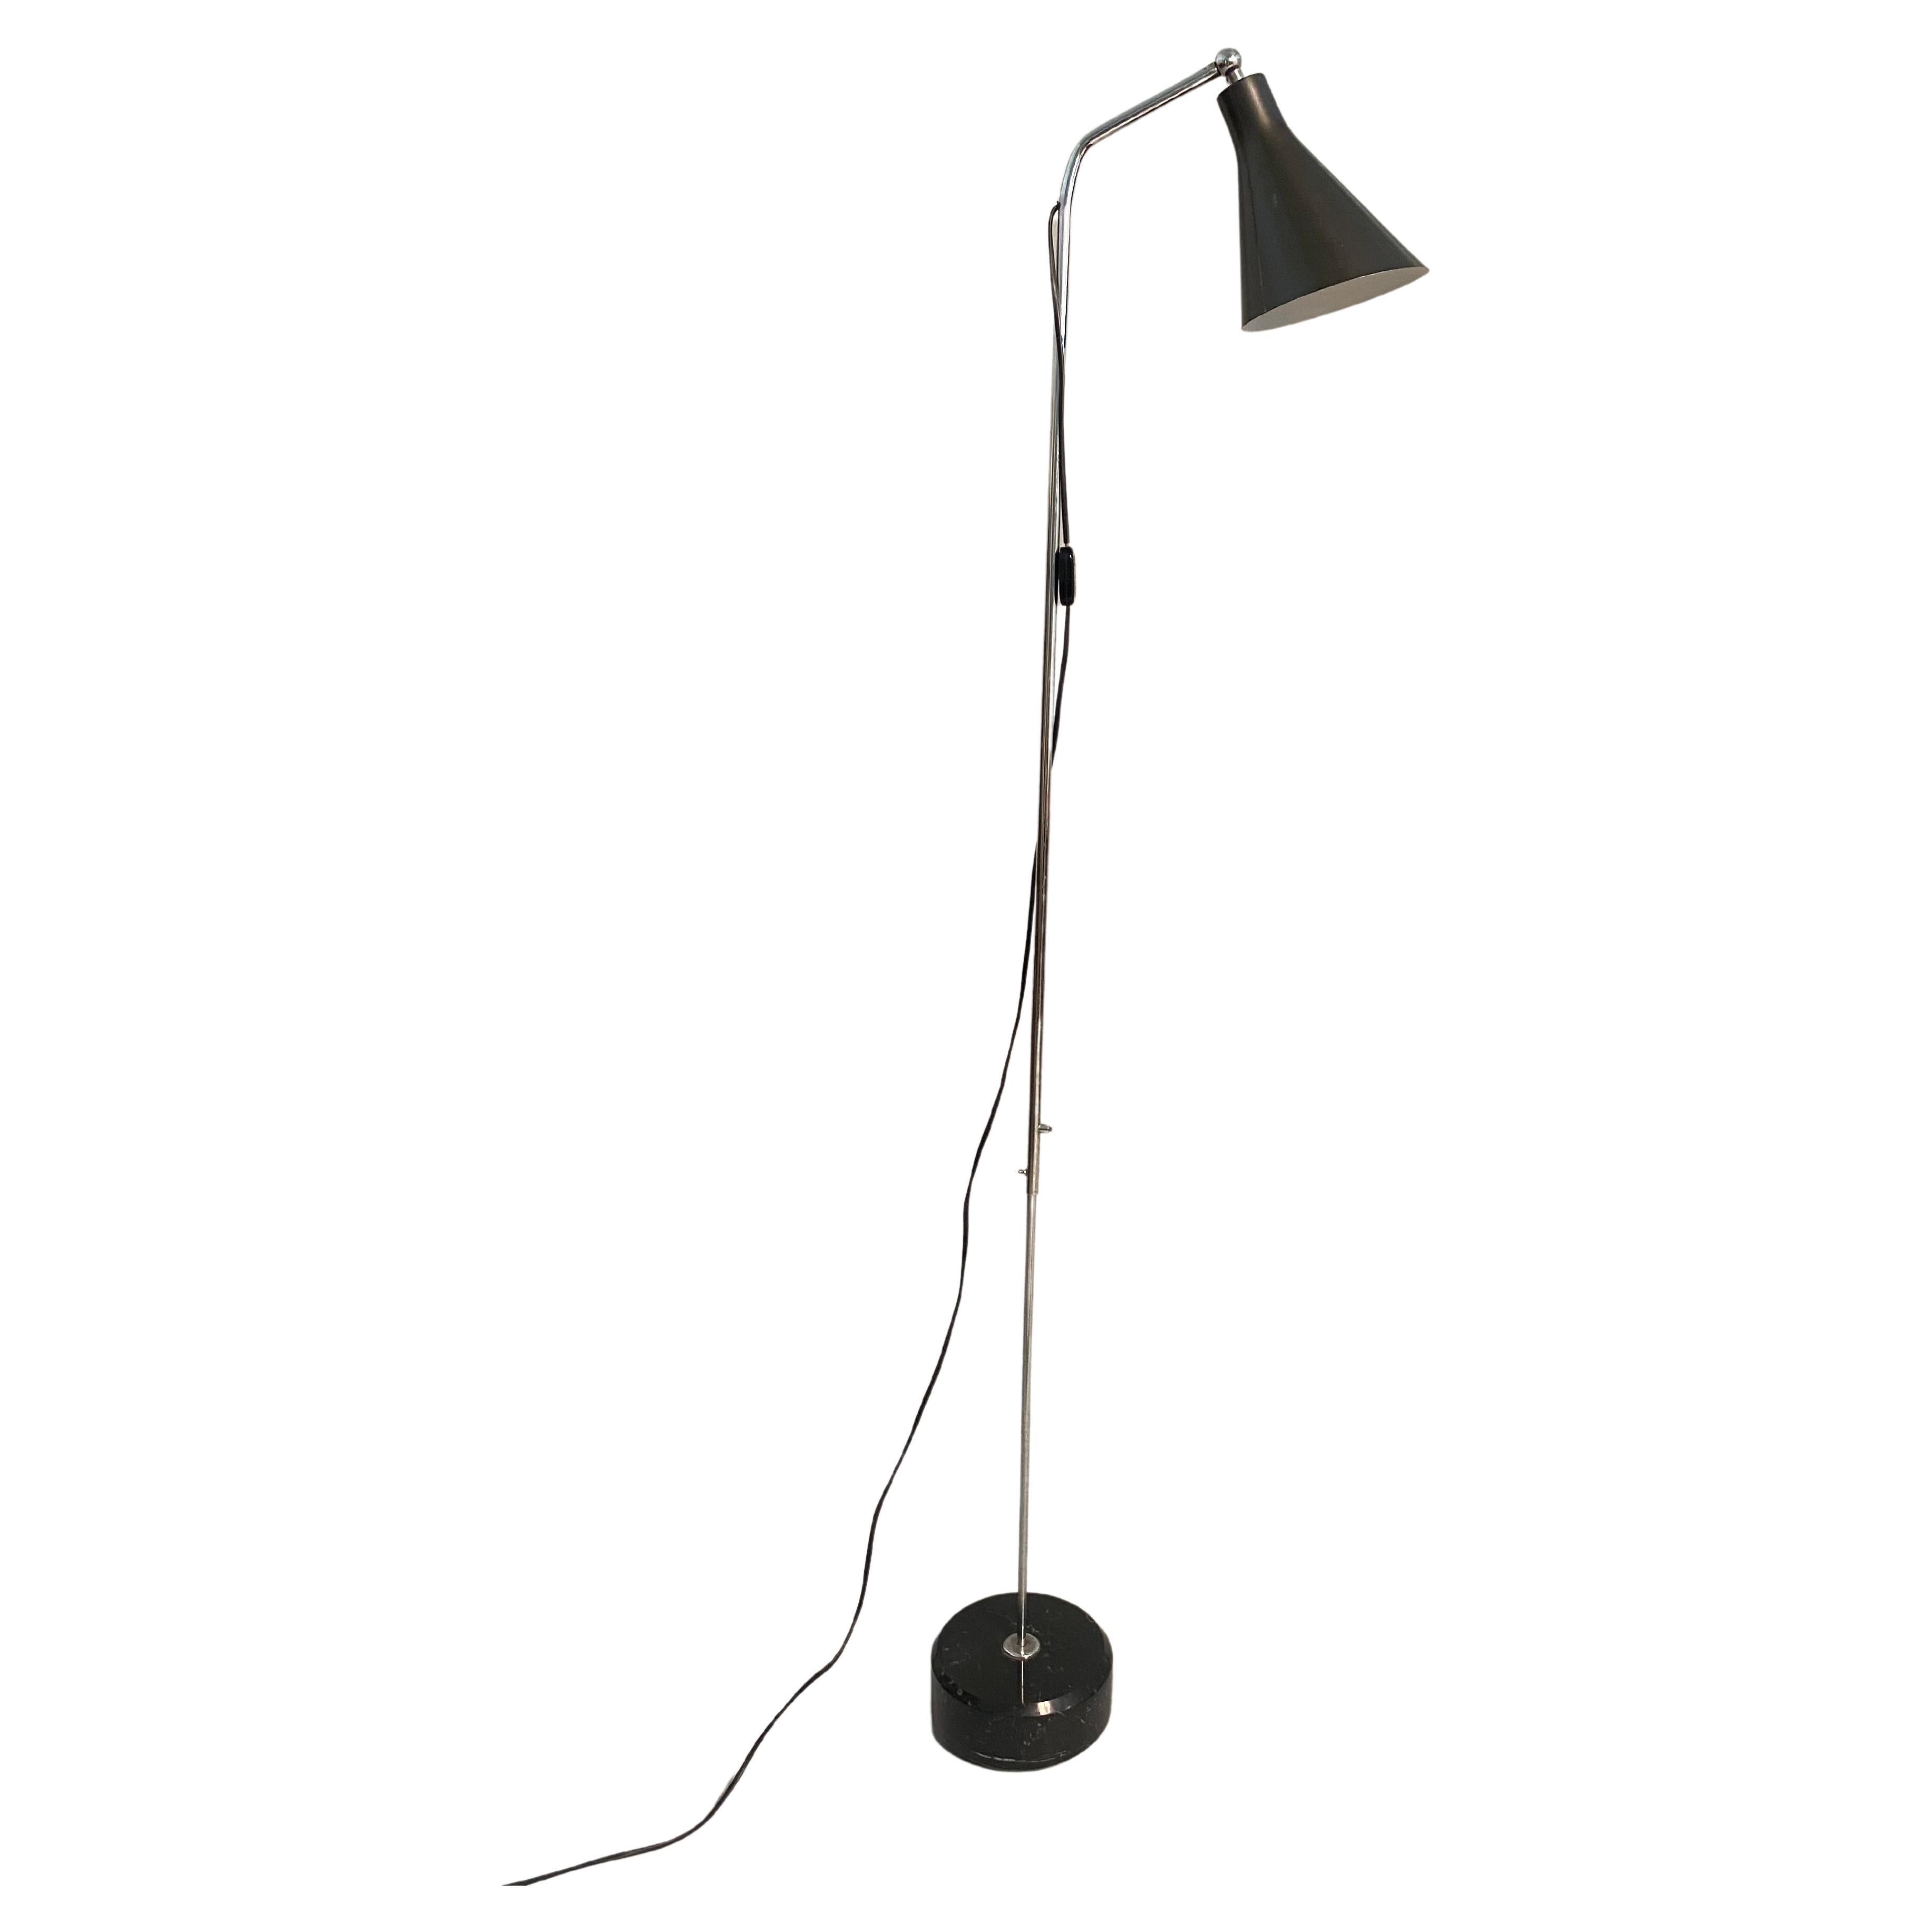 Ignazio Gardella, Extendible Floor Lamp "Alzabile" Mod. LT3 by Azucena, 1950 Ca.